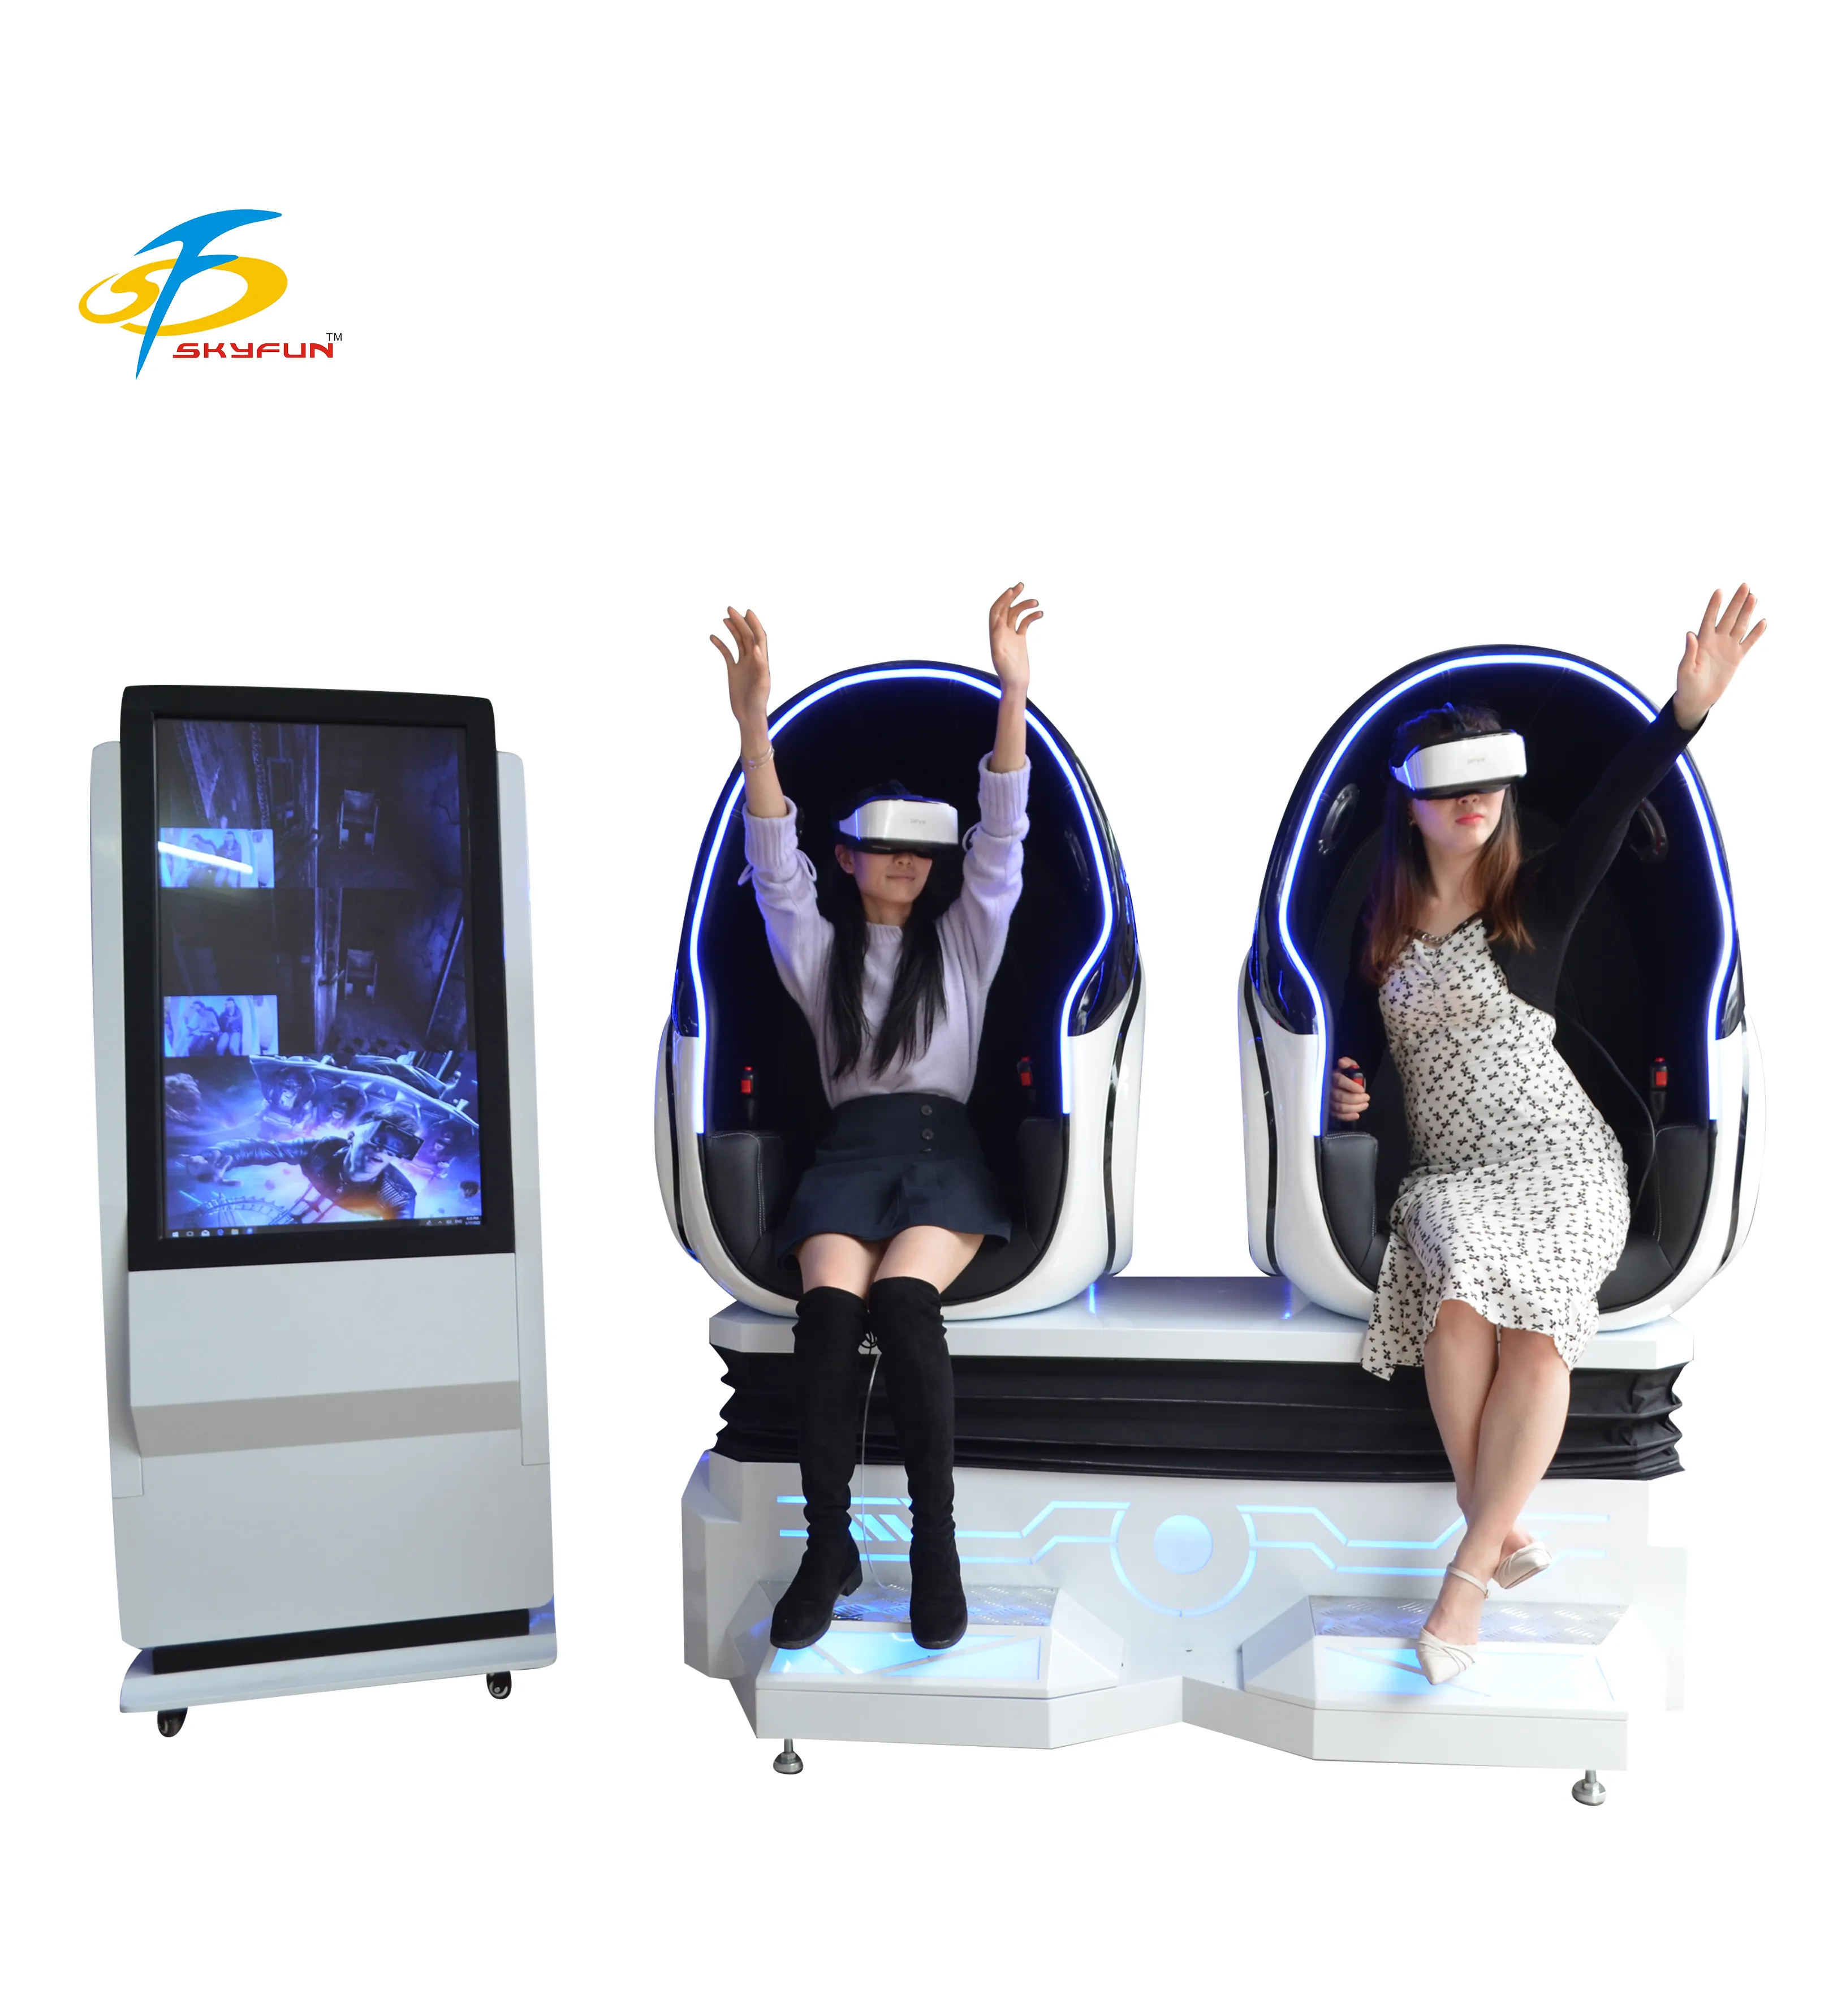 Skyfun 2 / 3 / 4 siège multijoueur vr oeuf chaise 9D vr Tout En Un vr roller coaster simulator 360 vr simulateur